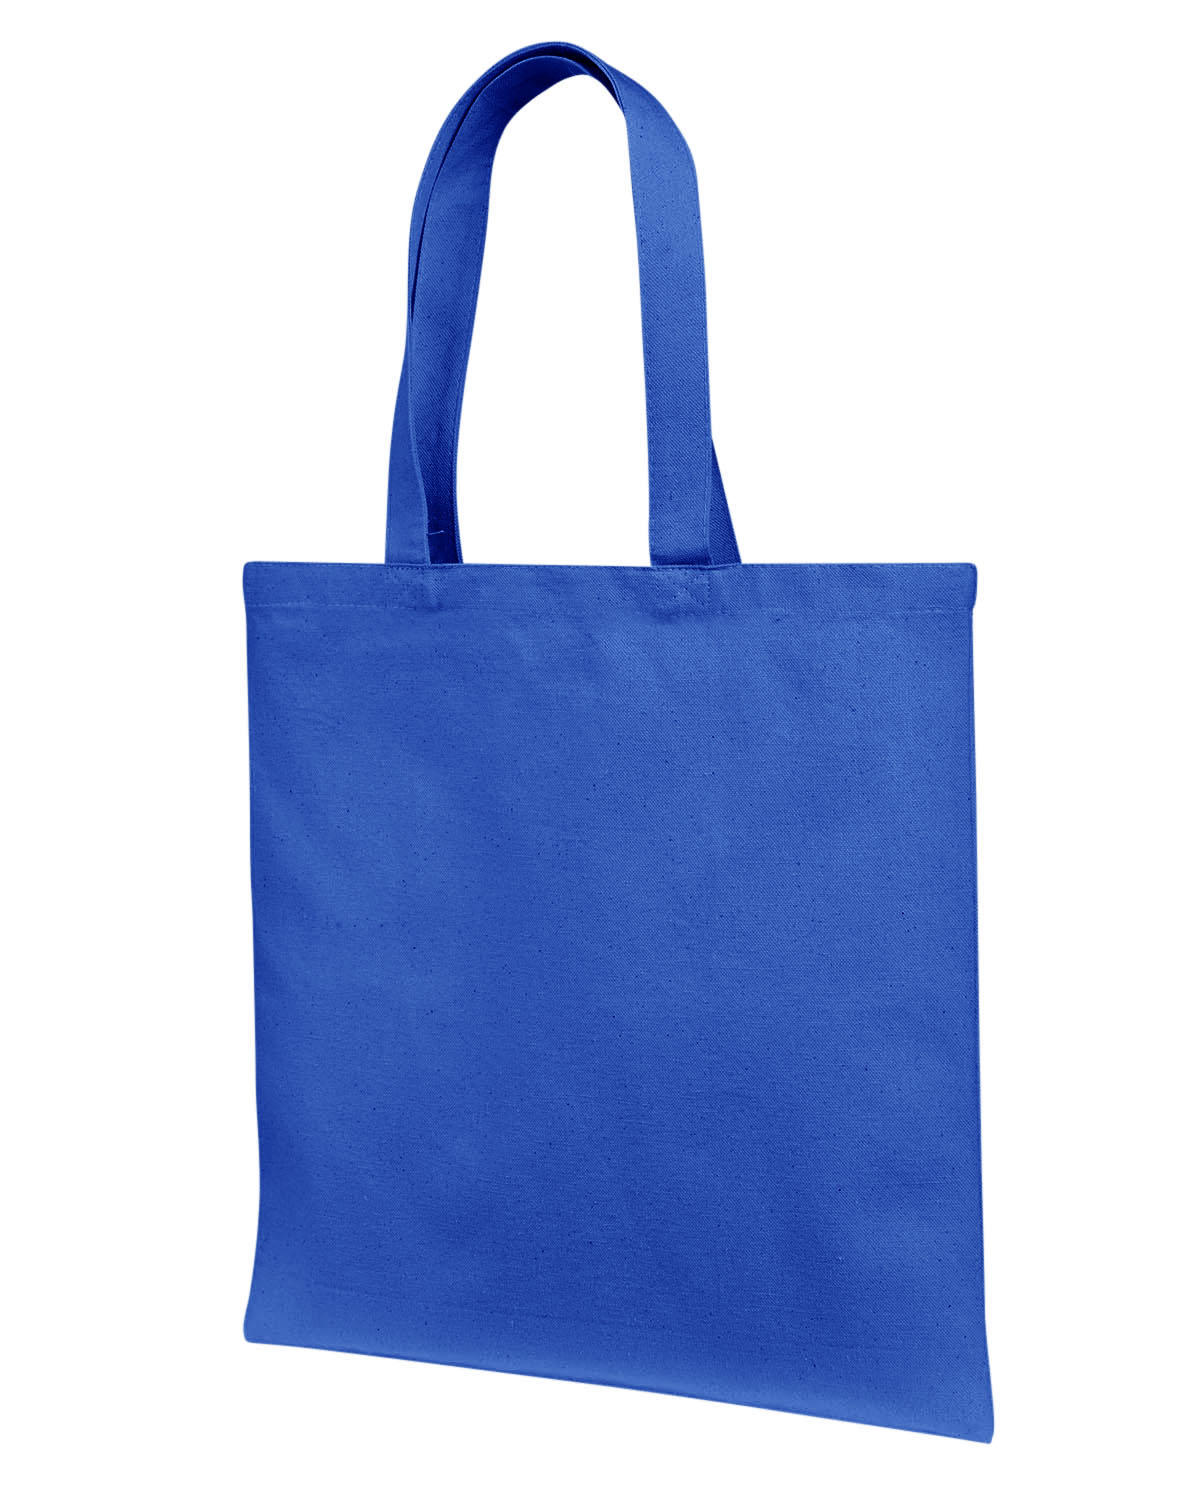 LB85113 Liberty Bags 12 oz., Cotton Canvas Tote Bag With Self Fabric Handles